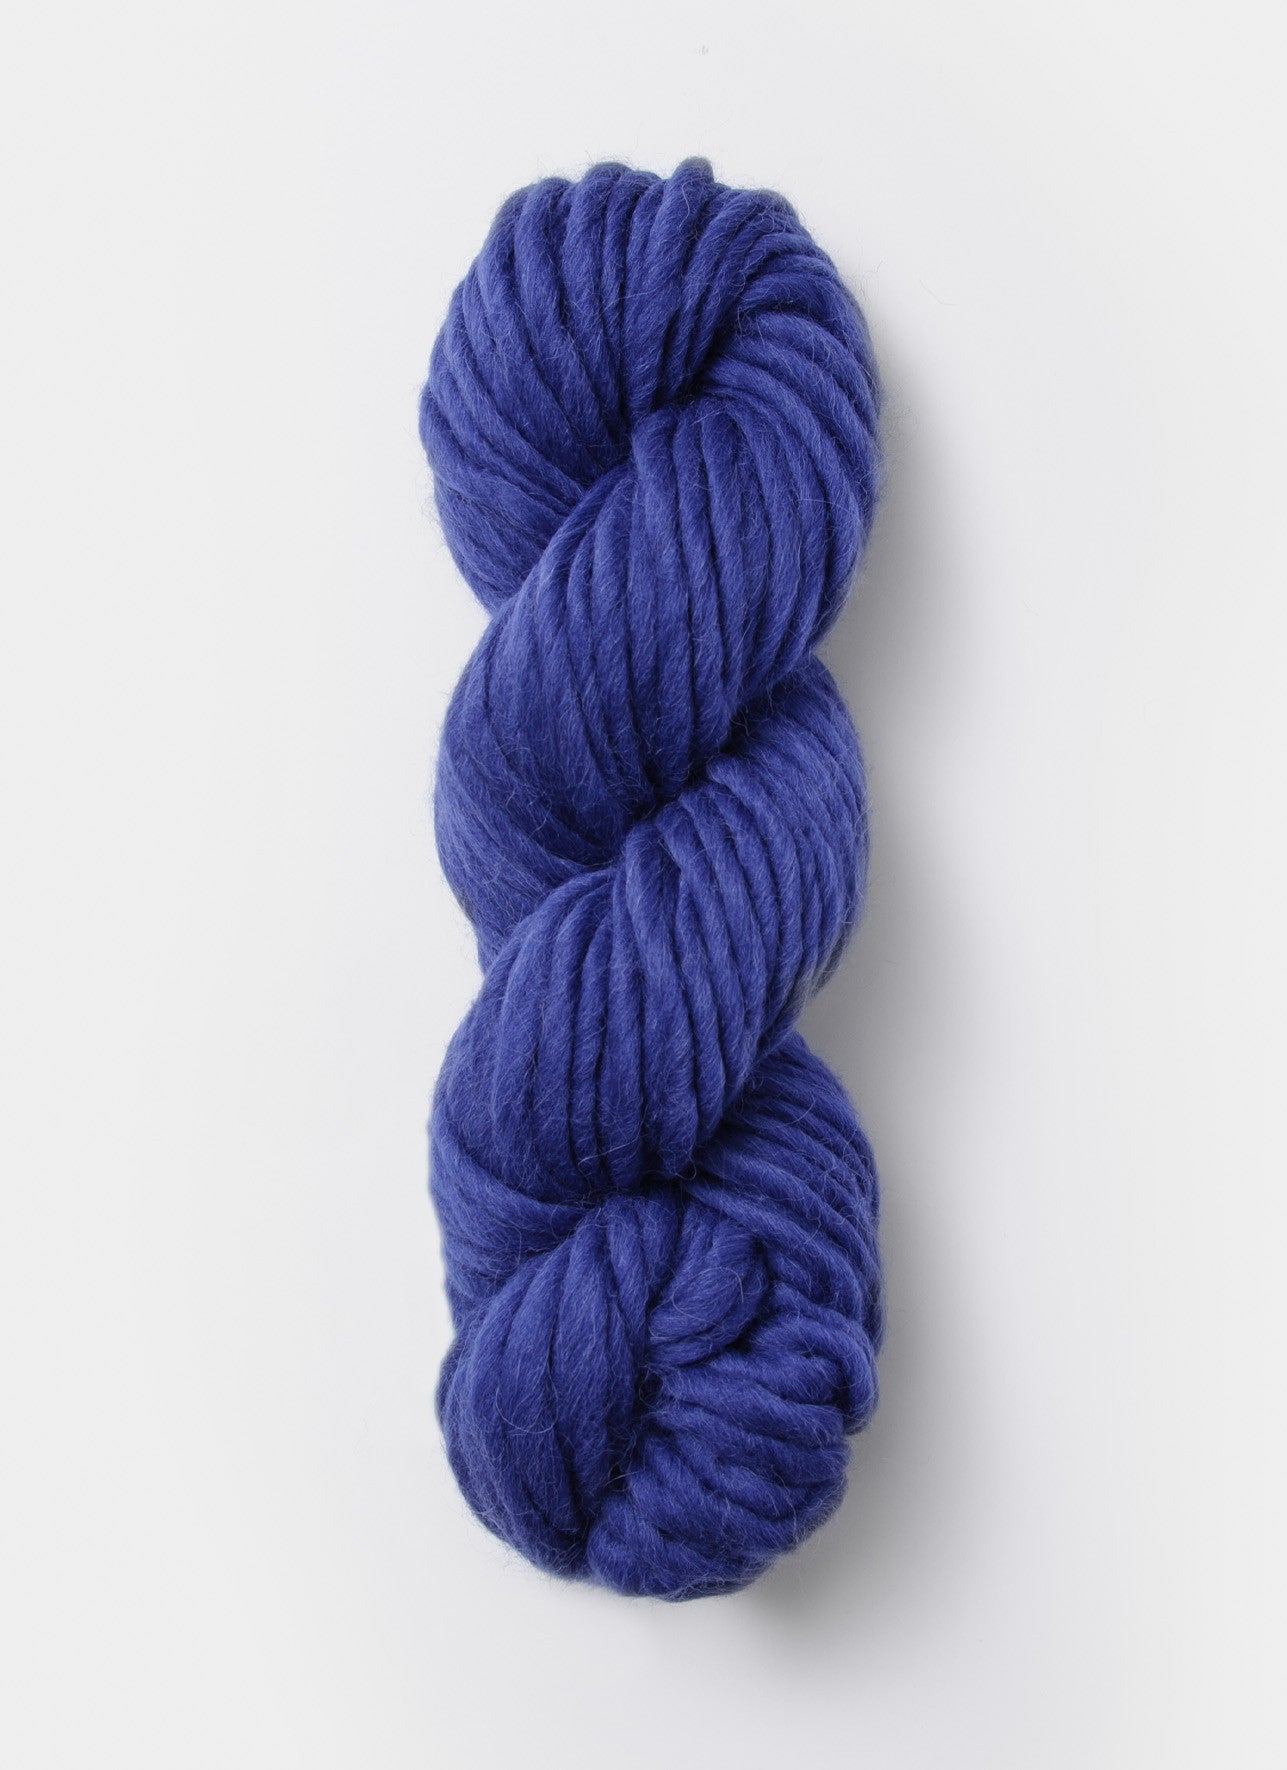 Blue Sky Skinny Cotton Organic Knitting Yarn at Fabulous Yarn